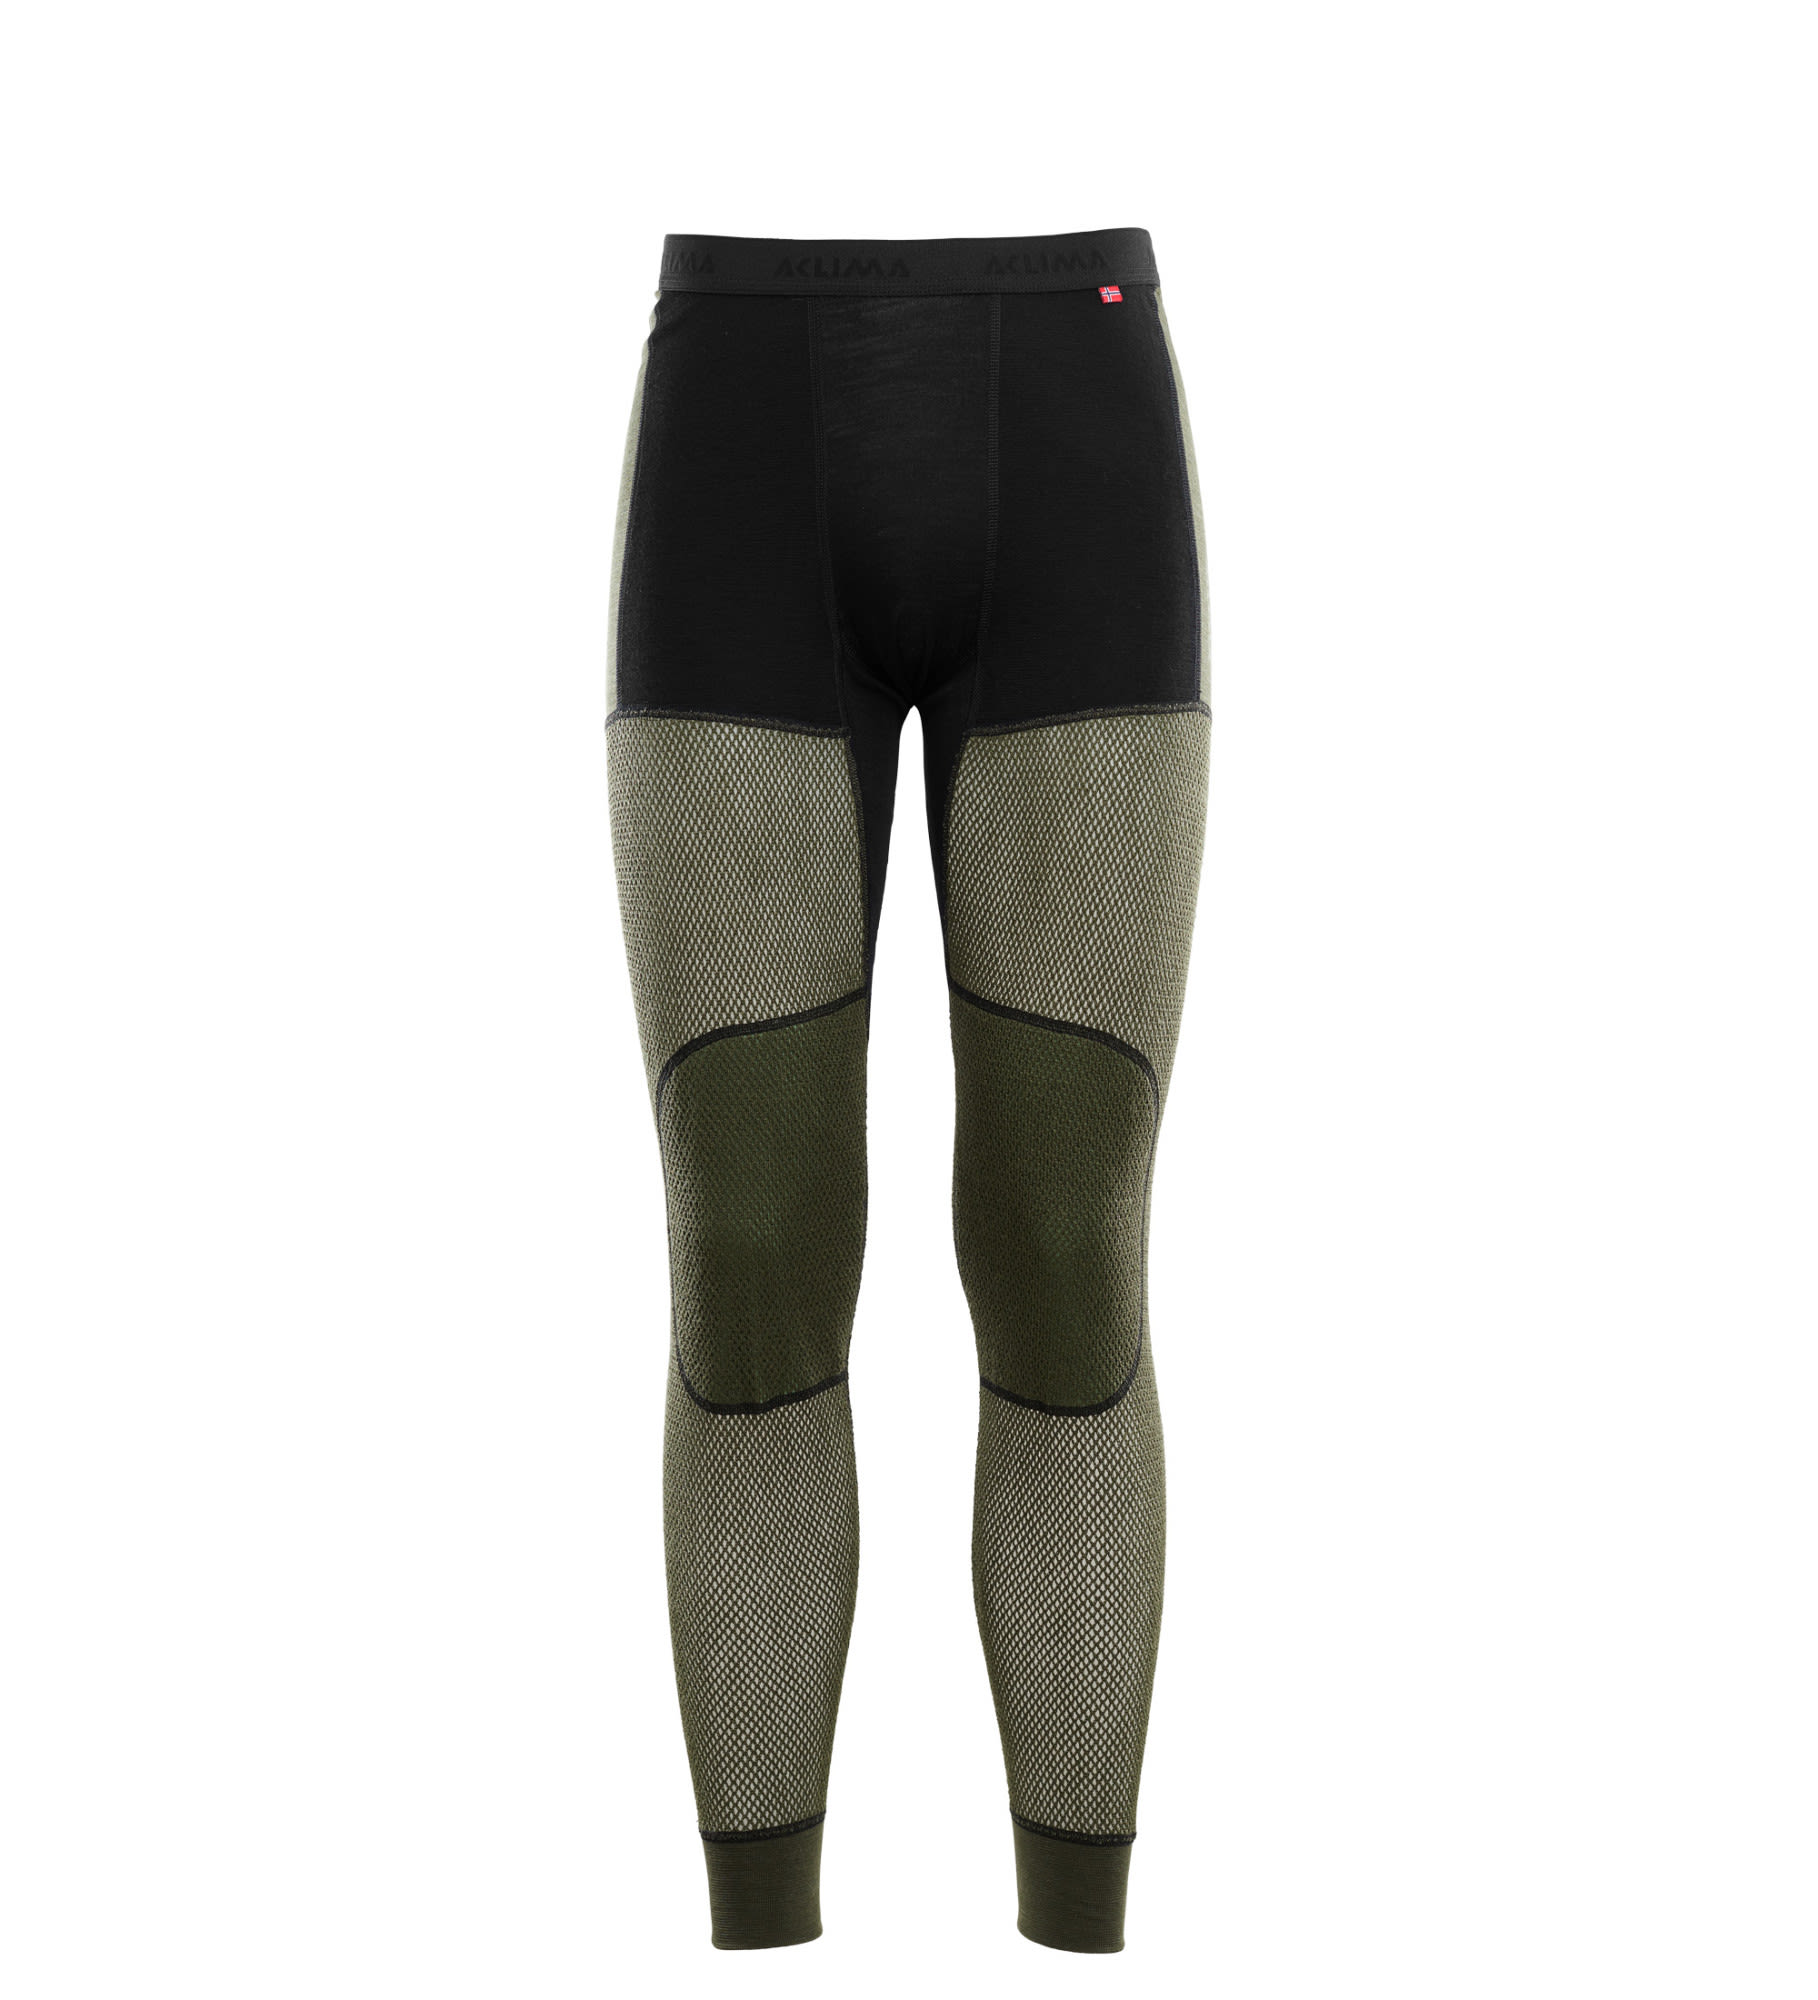 Aclima Woolnet Hybrid Long Pants Oliv- Male Merino Leggings und Tights- Grsse XS - Farbe Jet Black - Olive Night - Dill